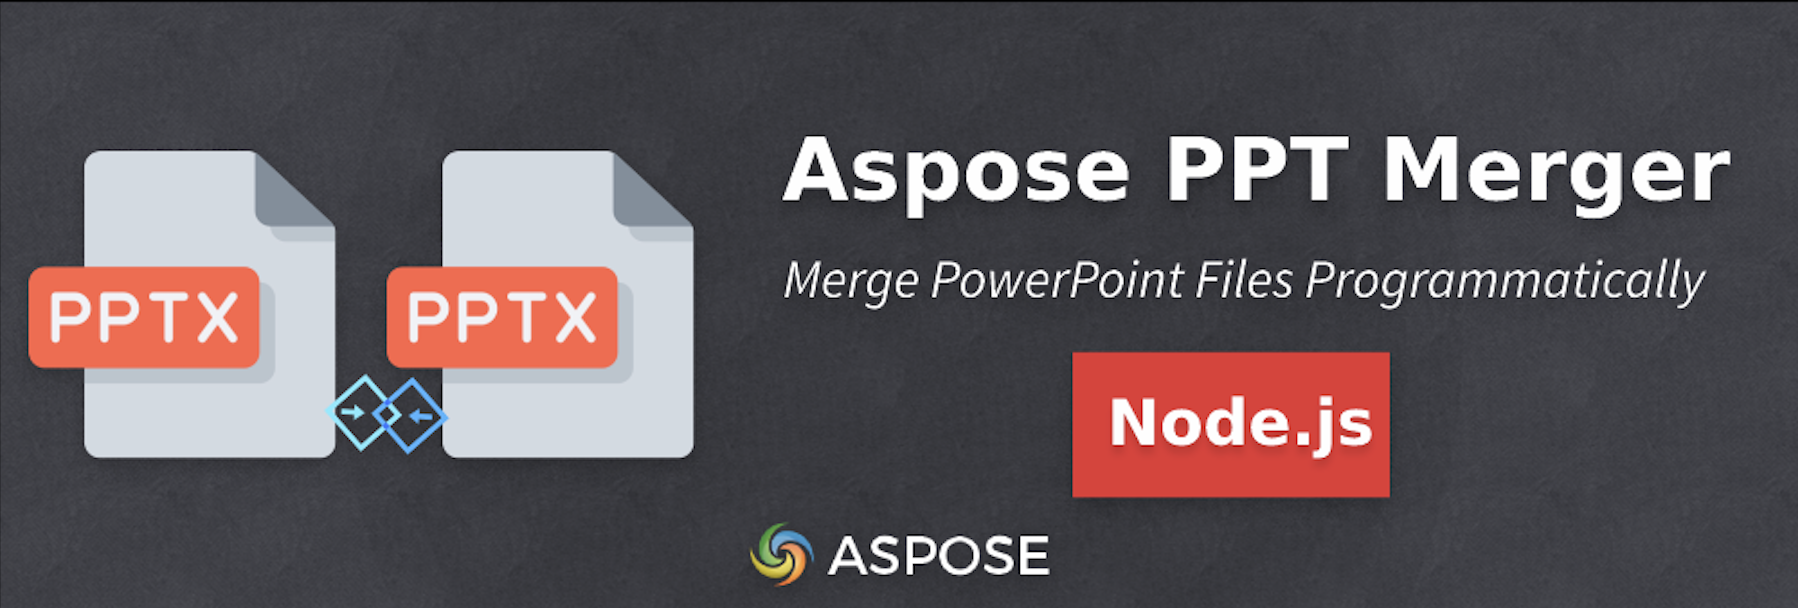 Node.js で複数の PowerPoint を結合する - Aspose PPT Merger